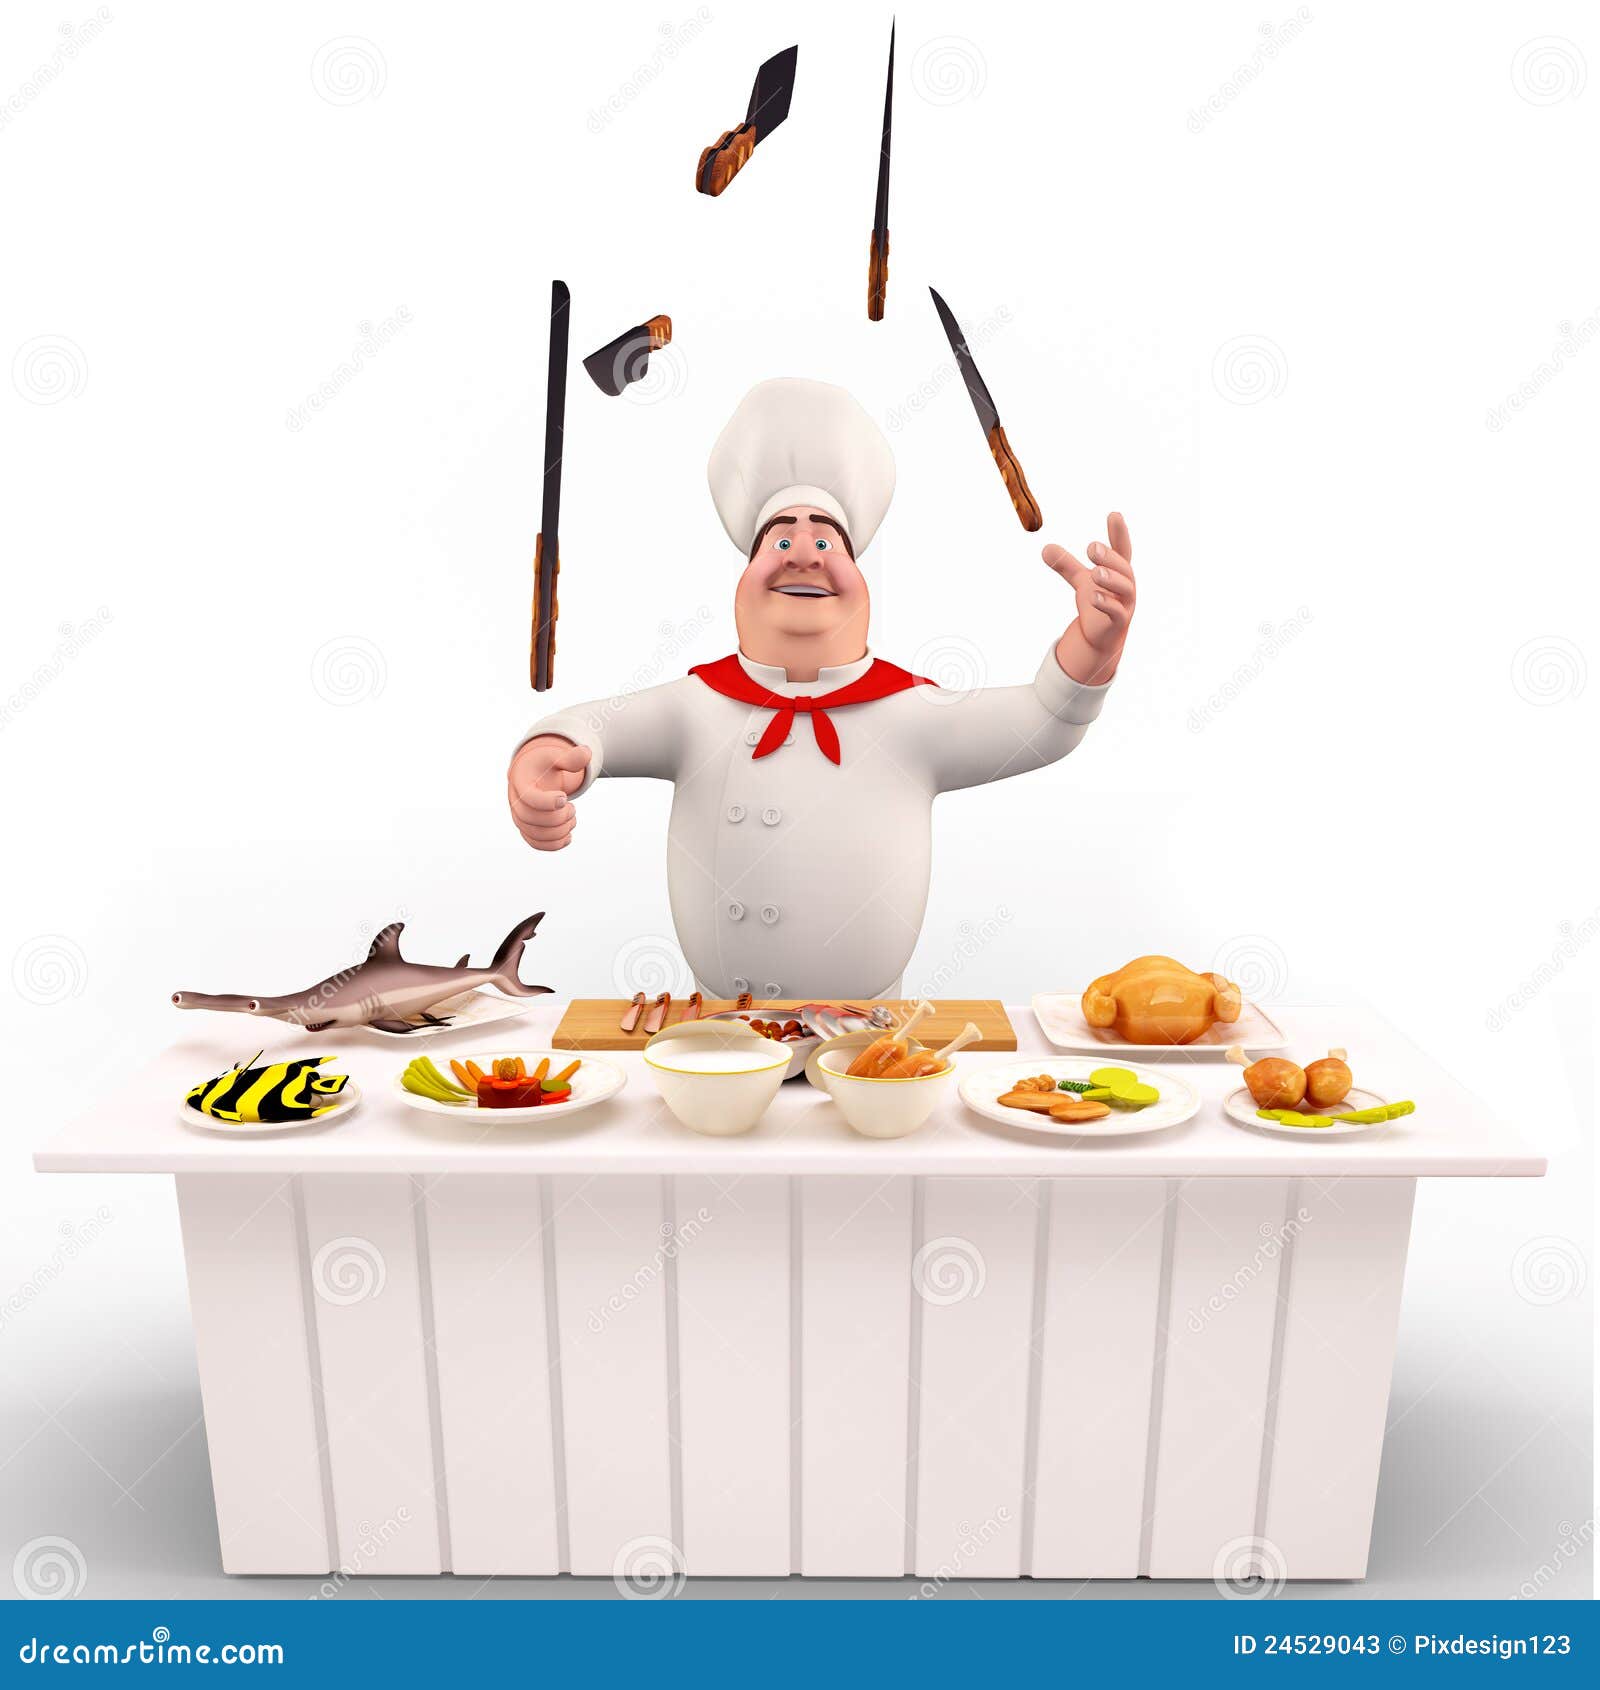 chef-knife-table-24529043.jpg